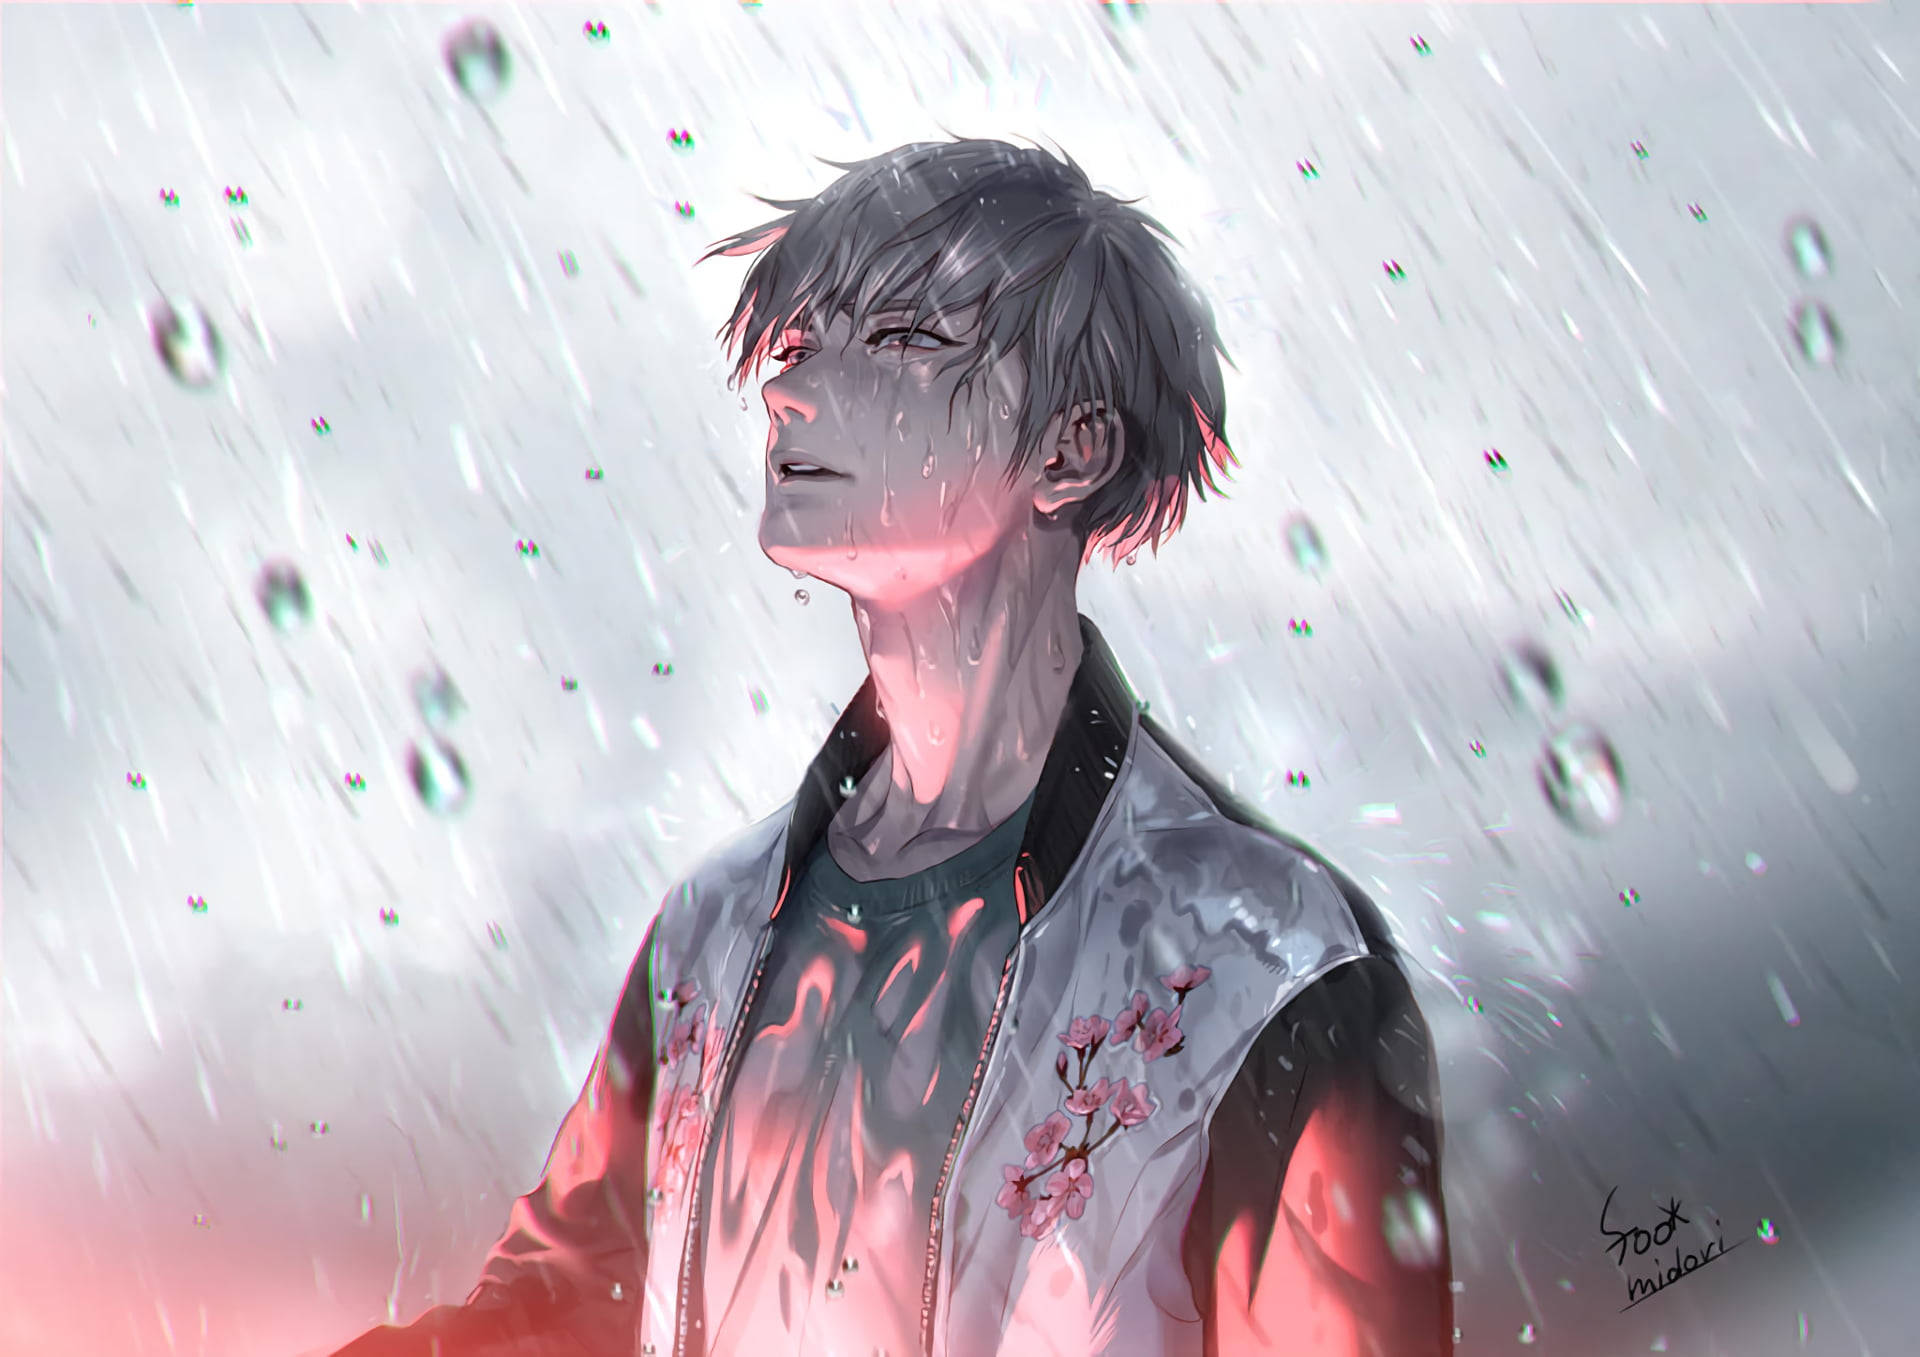 Einsametraurige Anime Jungs Durchnässt Im Regen Wallpaper